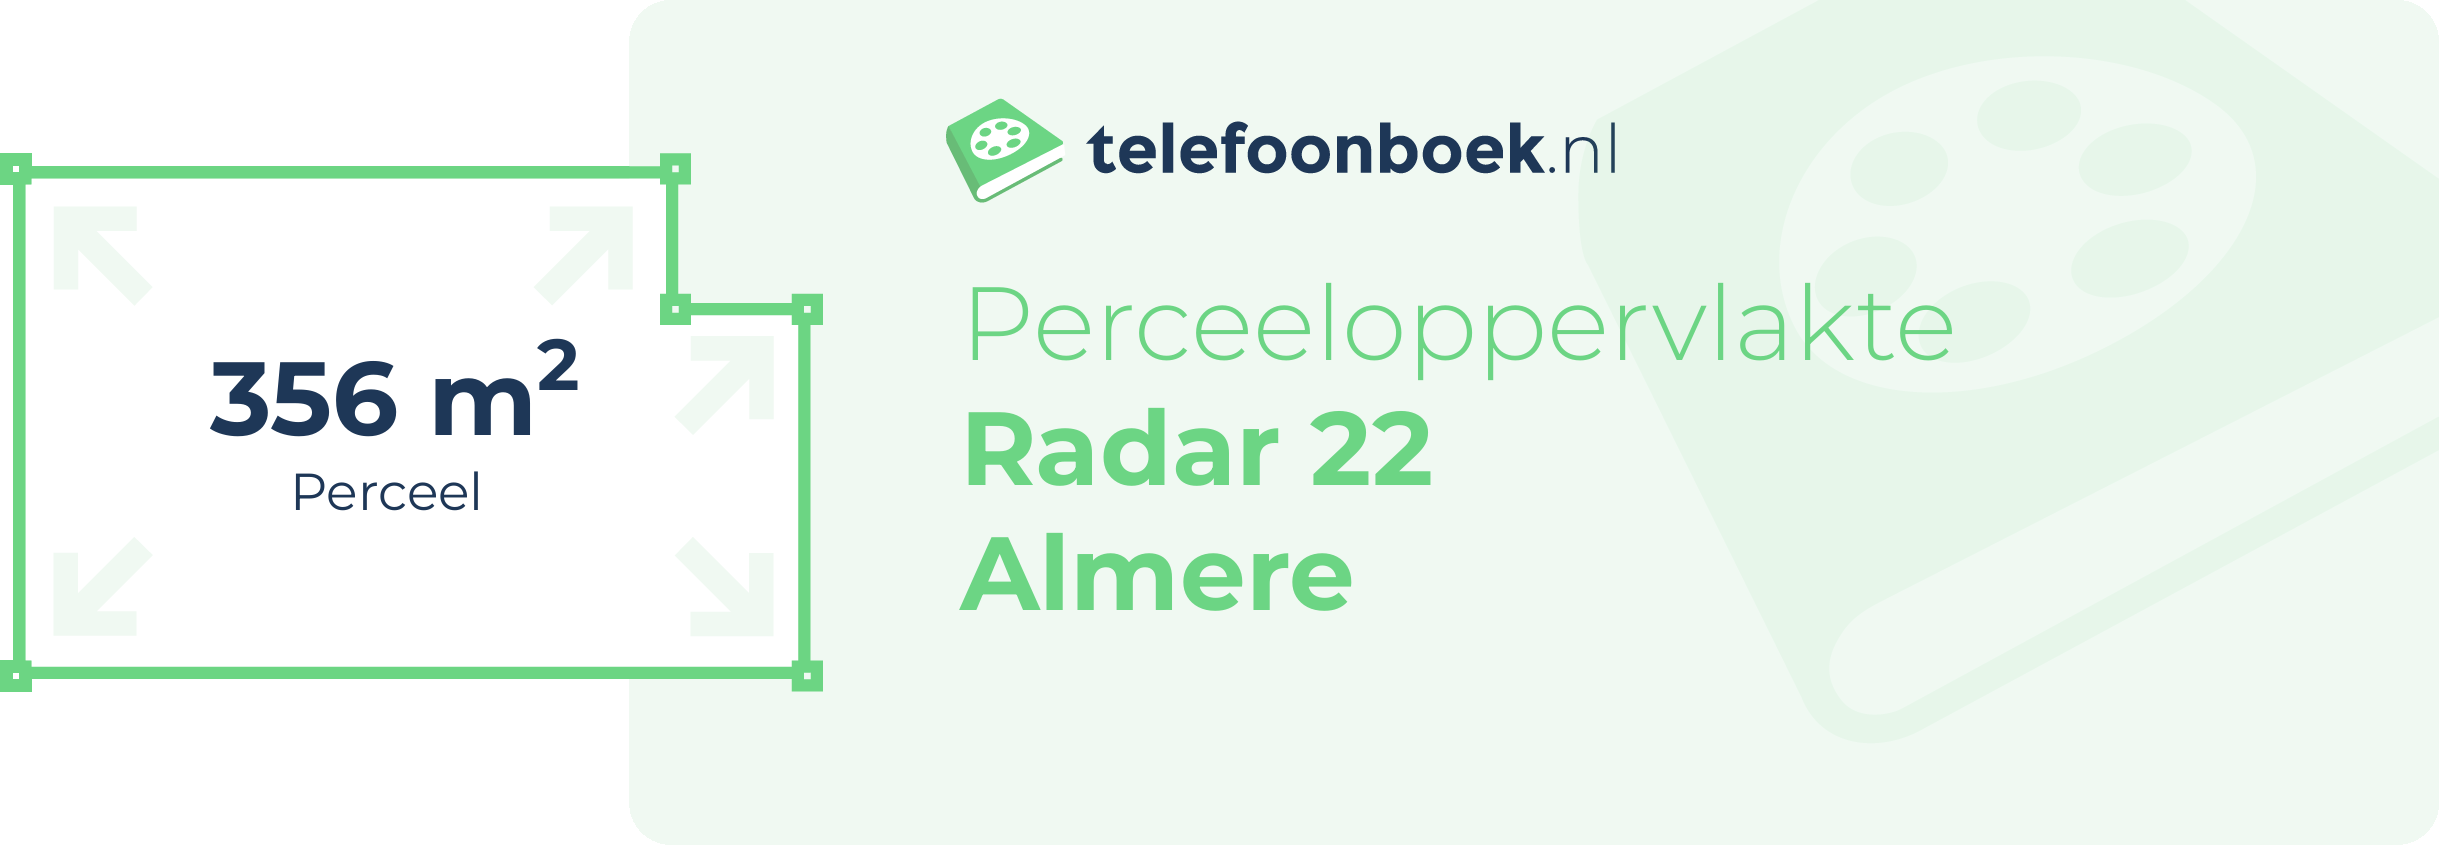 Perceeloppervlakte Radar 22 Almere